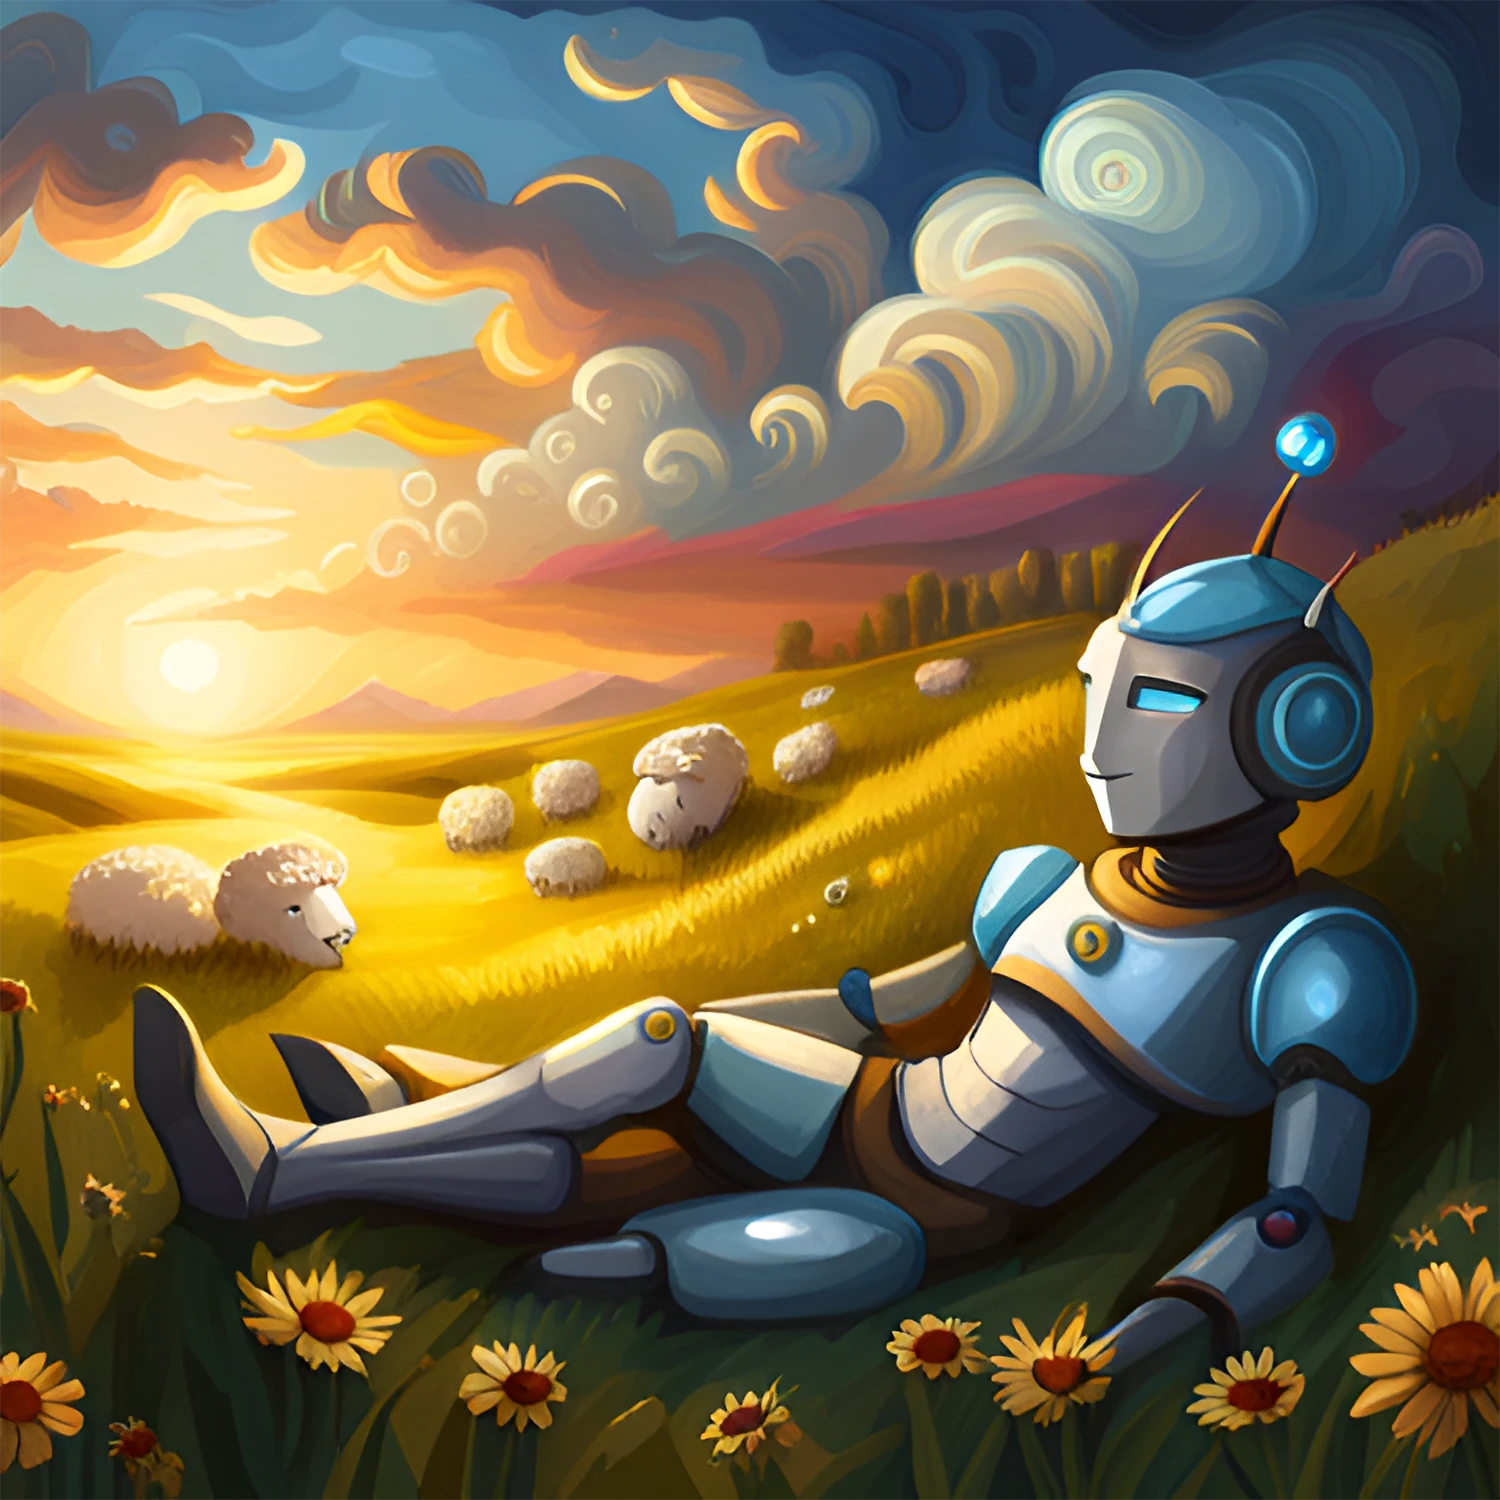 Robot sleeping in a meadow